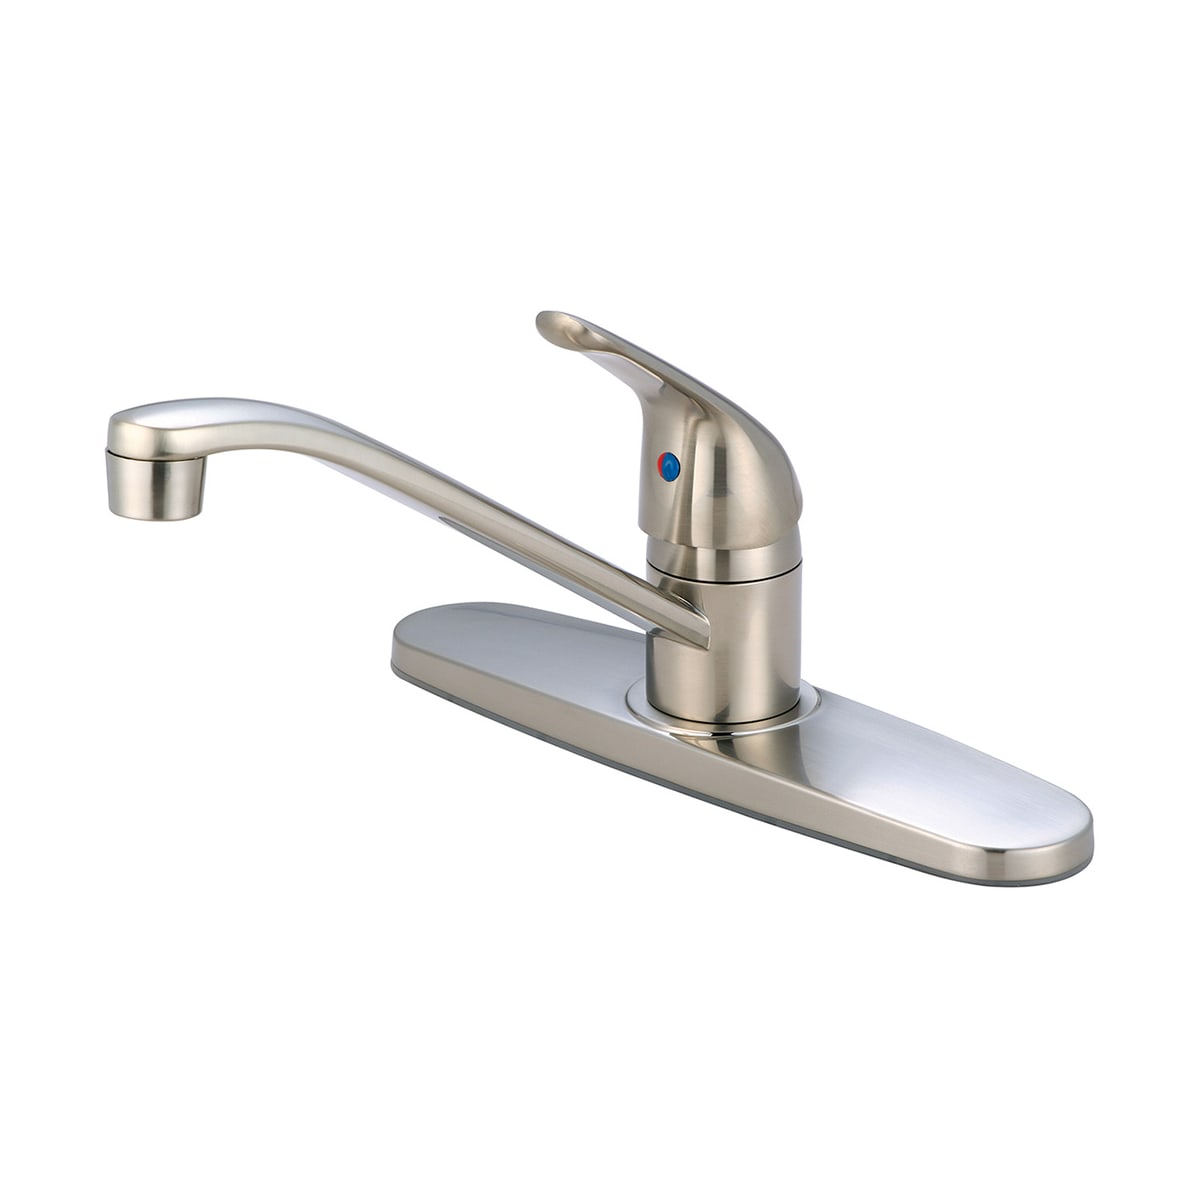 Widespread Contemporary 360 degree Swivel Flexible Sprayer Kitchen Sink Faucets 